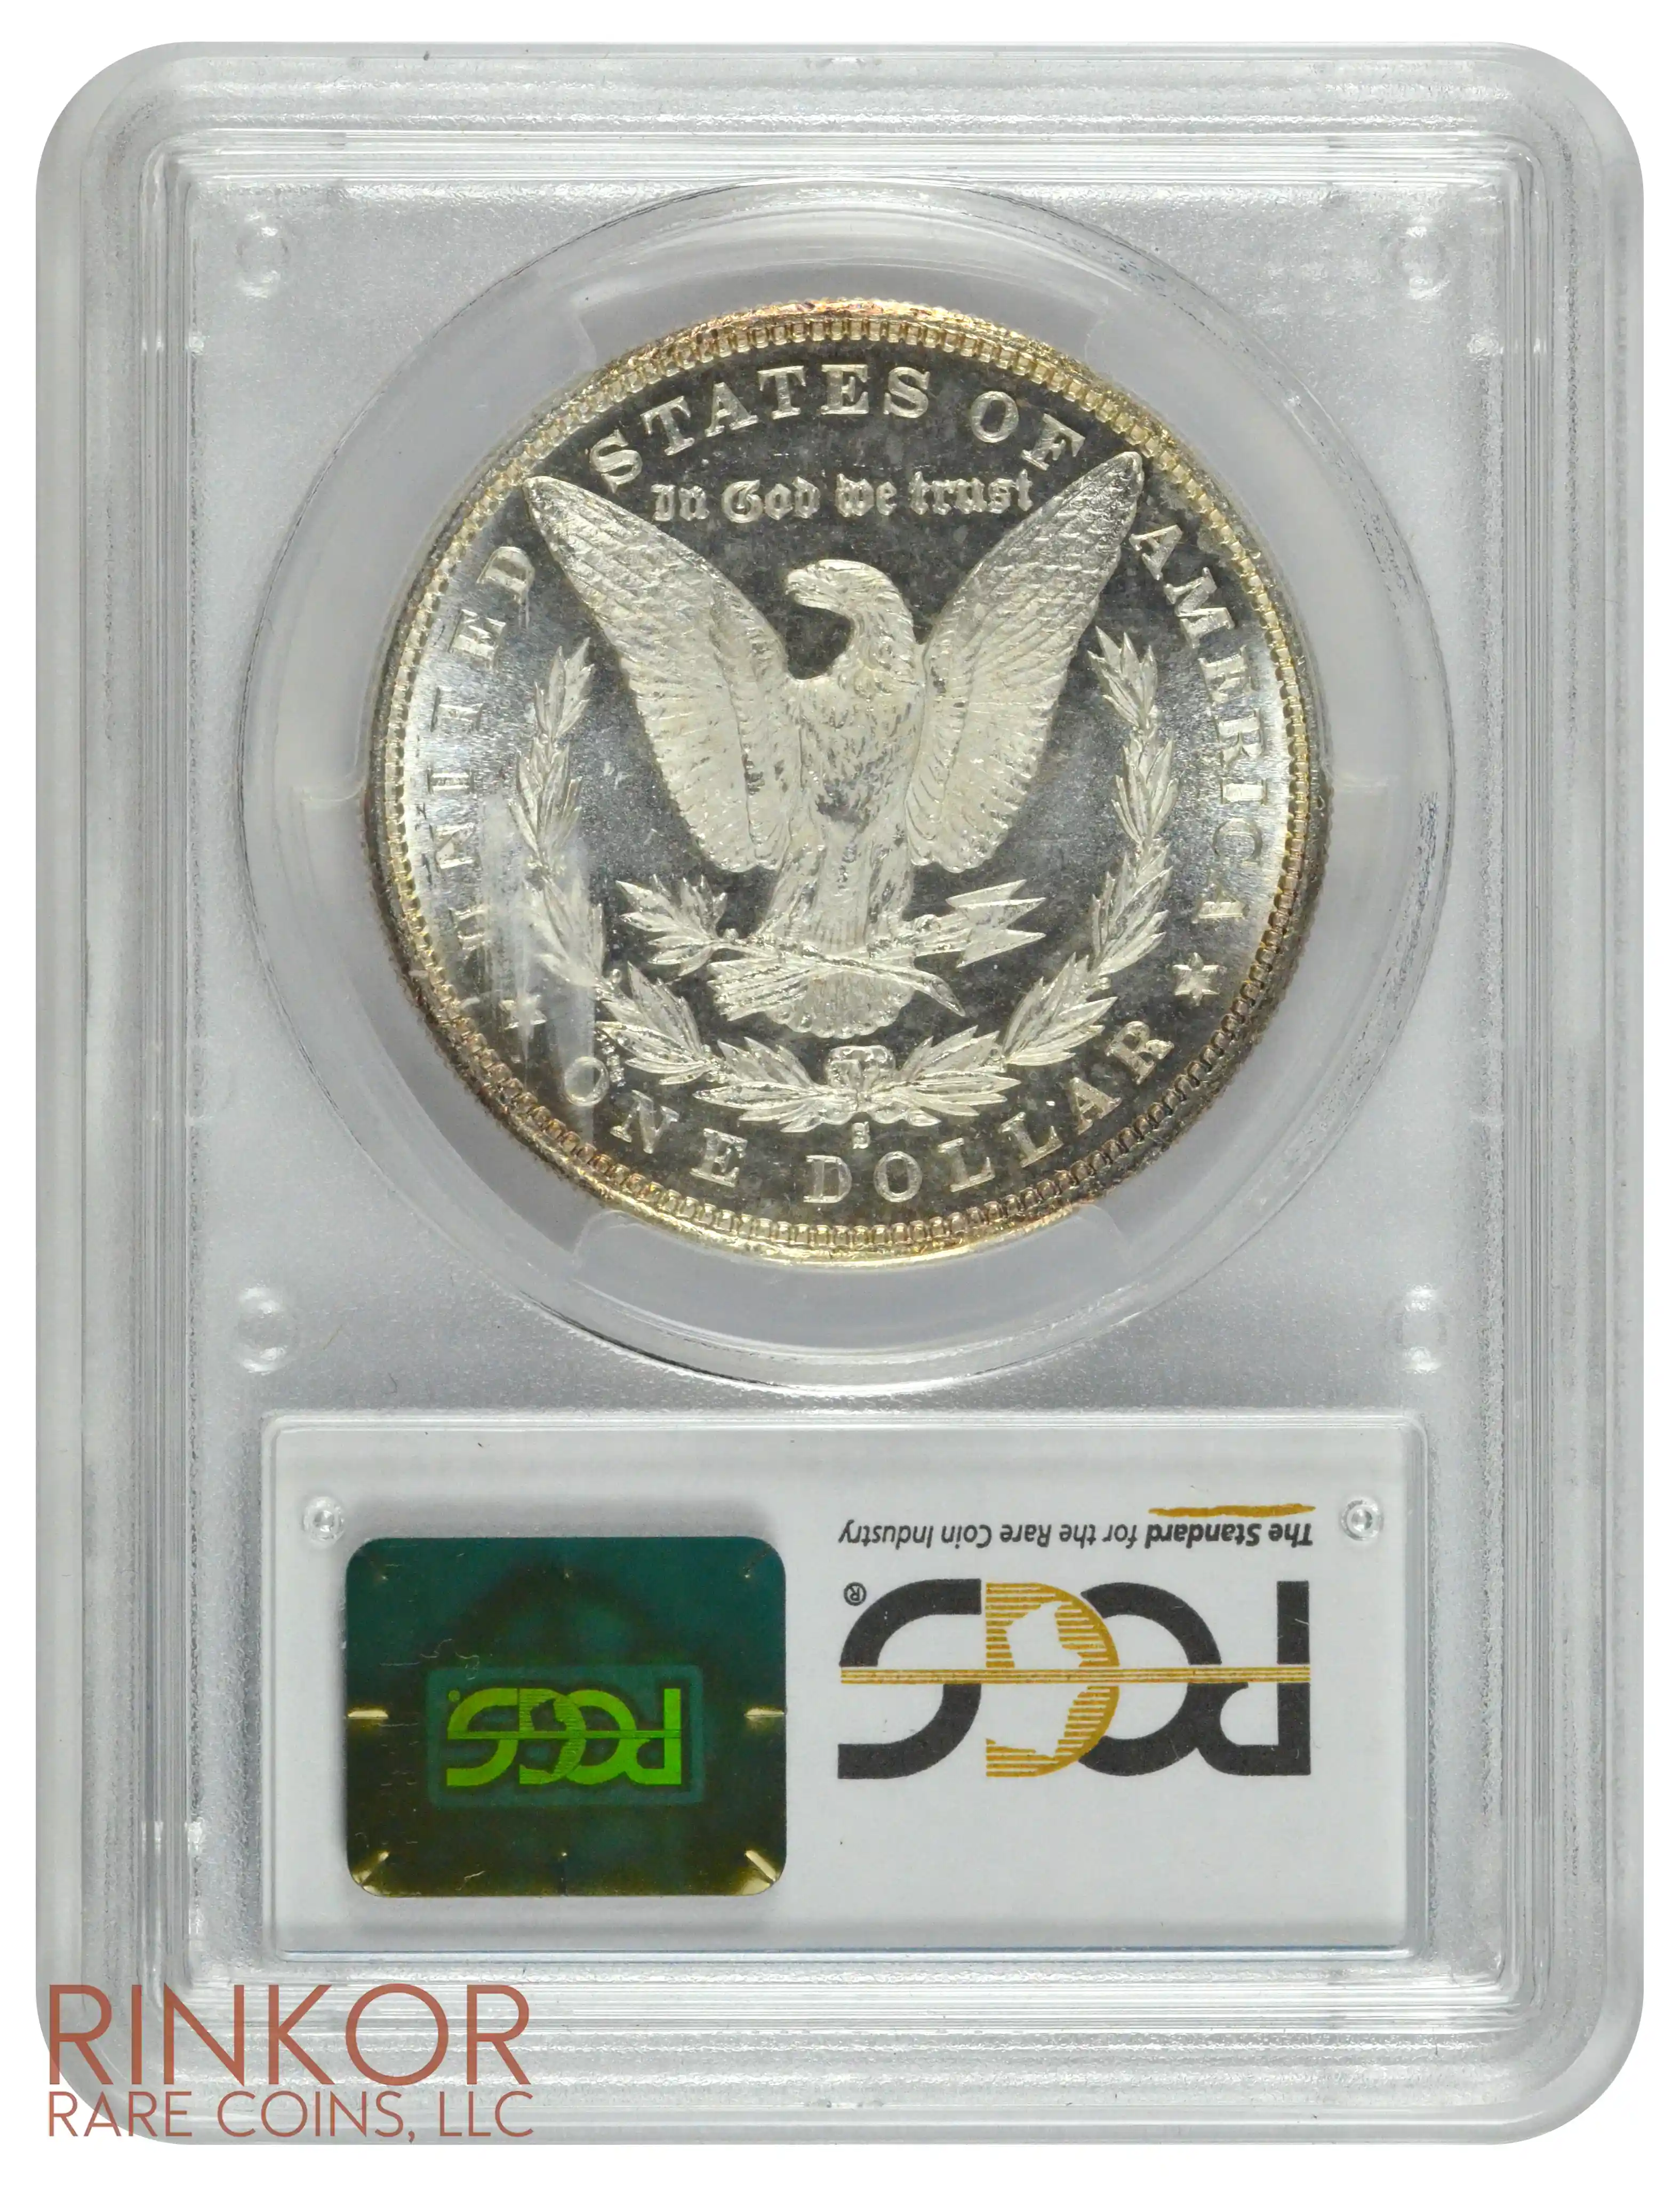 1881-S $1 PCGS MS 65 PL CAC